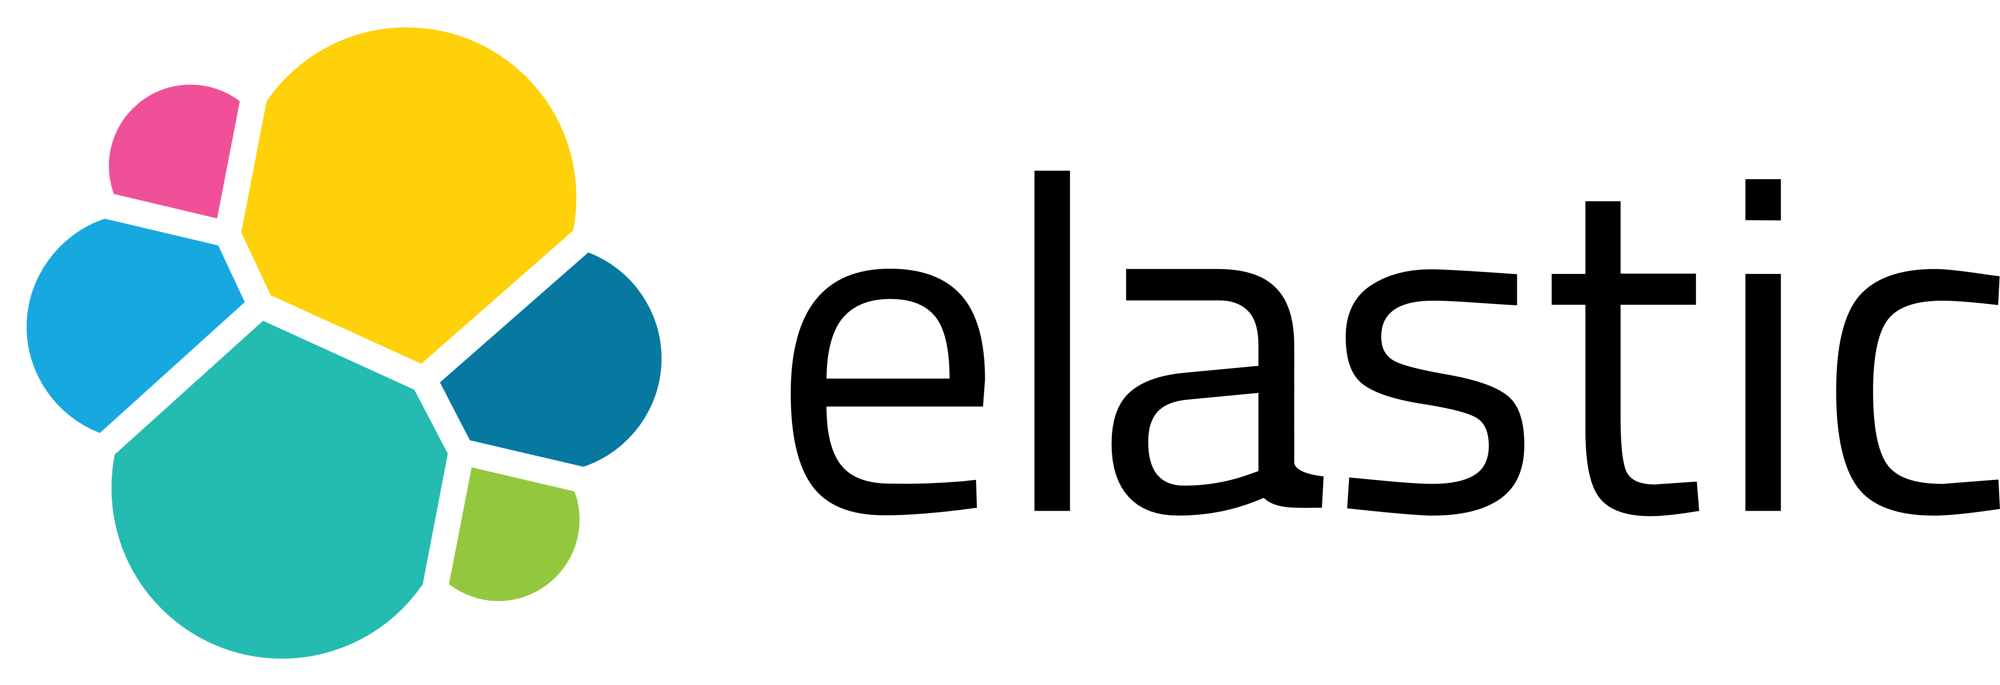 Elastic_logo (1)